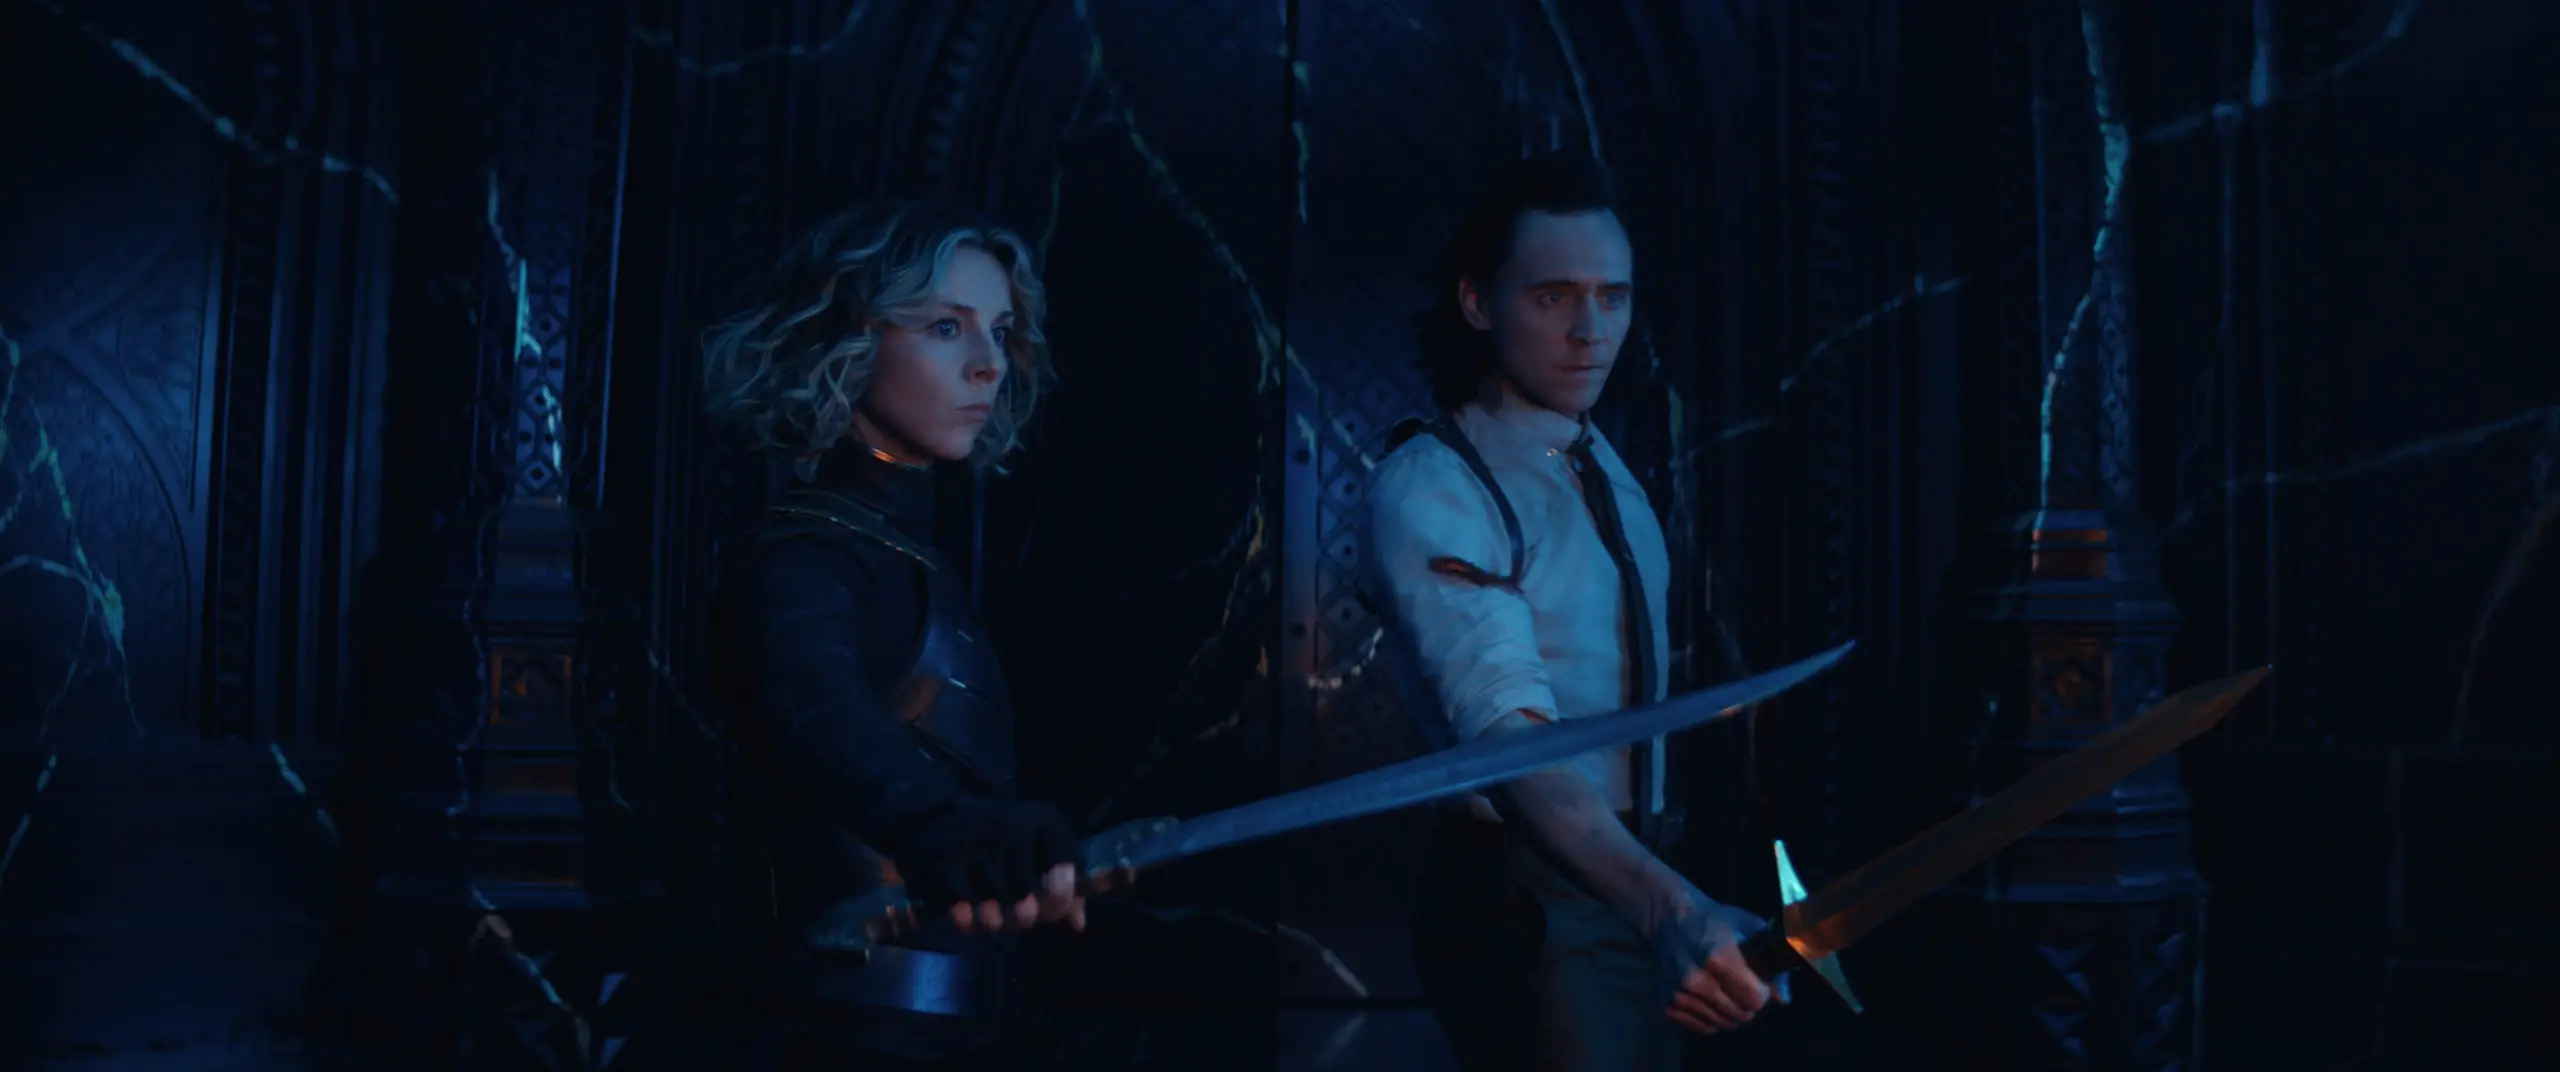 Loki and Sylvie enter the Citadel